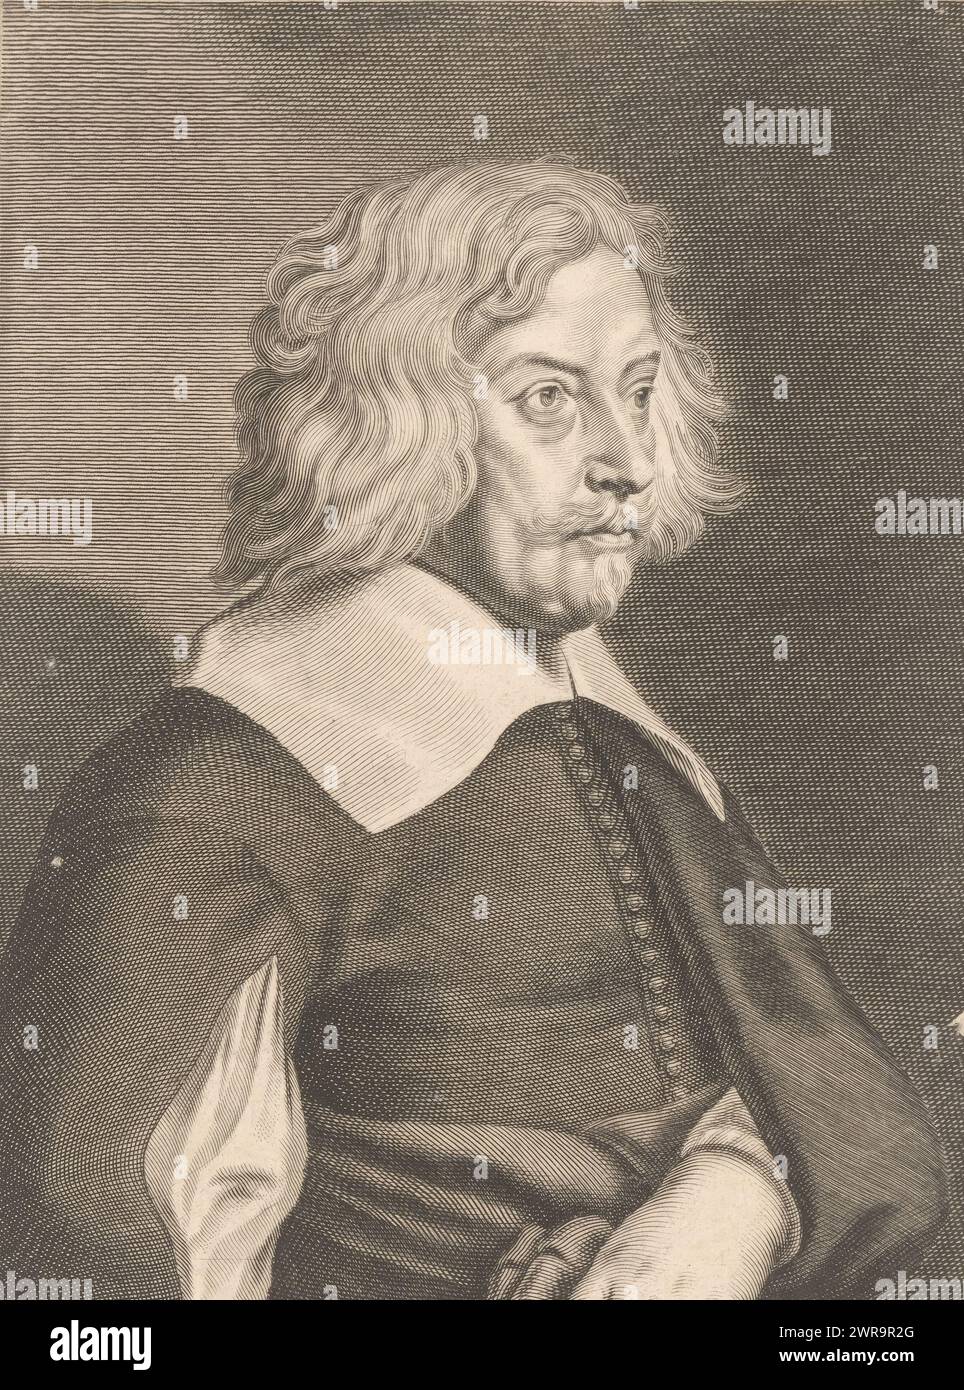 Portrait of Abel Brunier, print maker: Michel Lasne, 1600 - 1667, paper, engraving, height 209 mm × width 140 mm, print Stock Photo